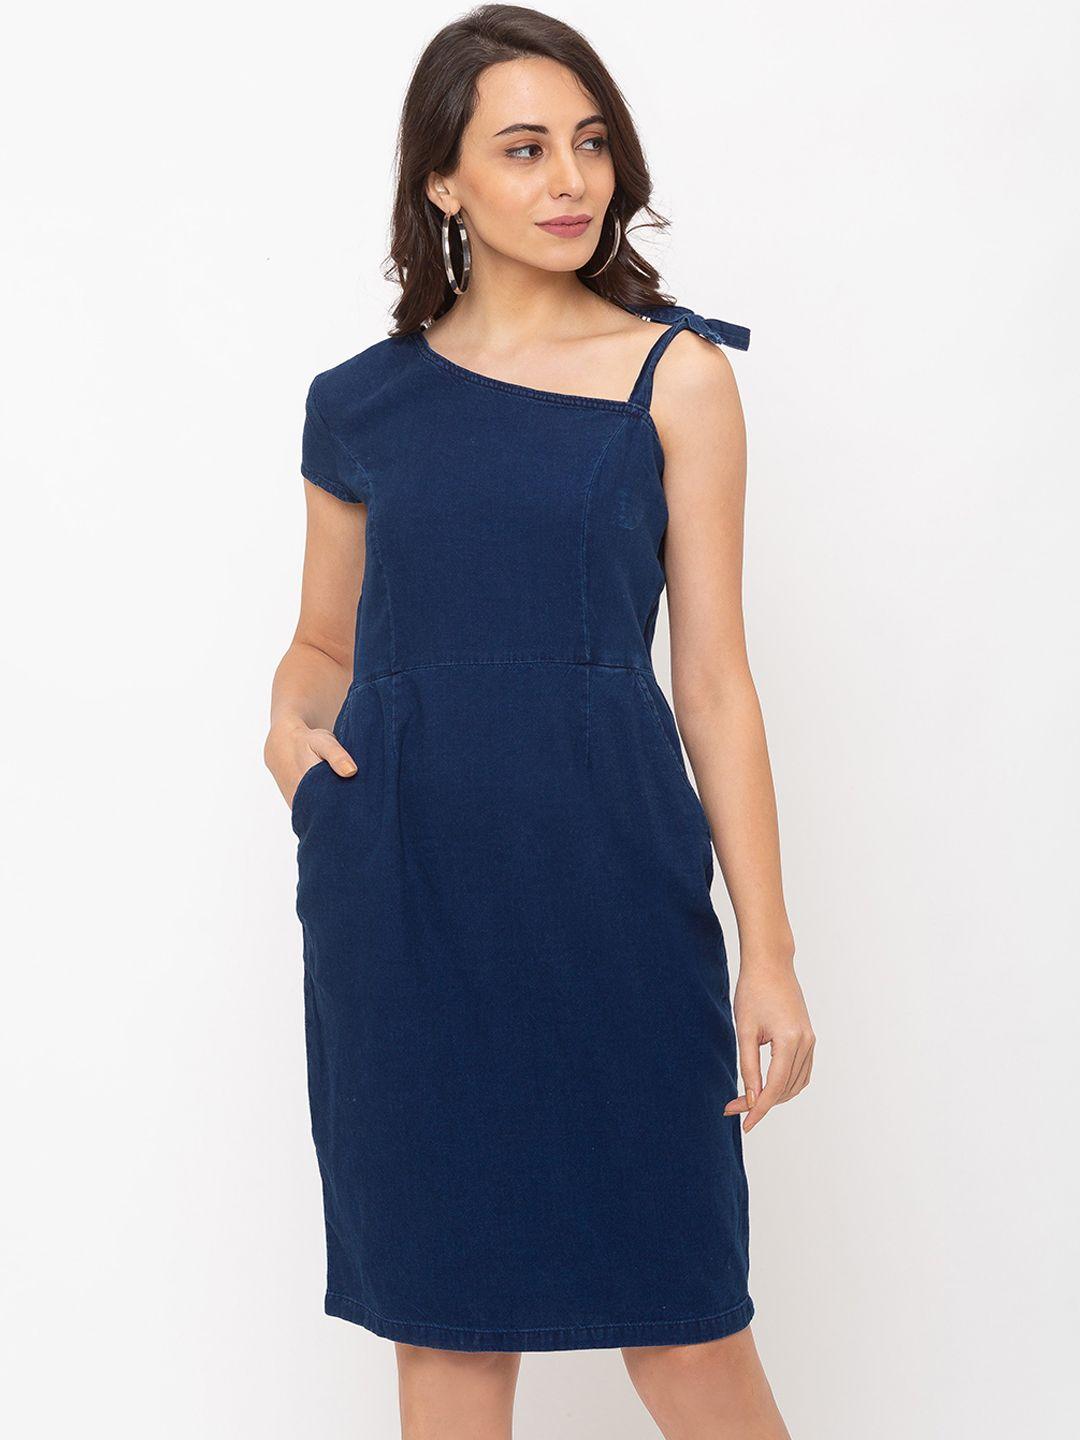 globus-women-navy-blue-solid-one-shoulder-sheath-dress